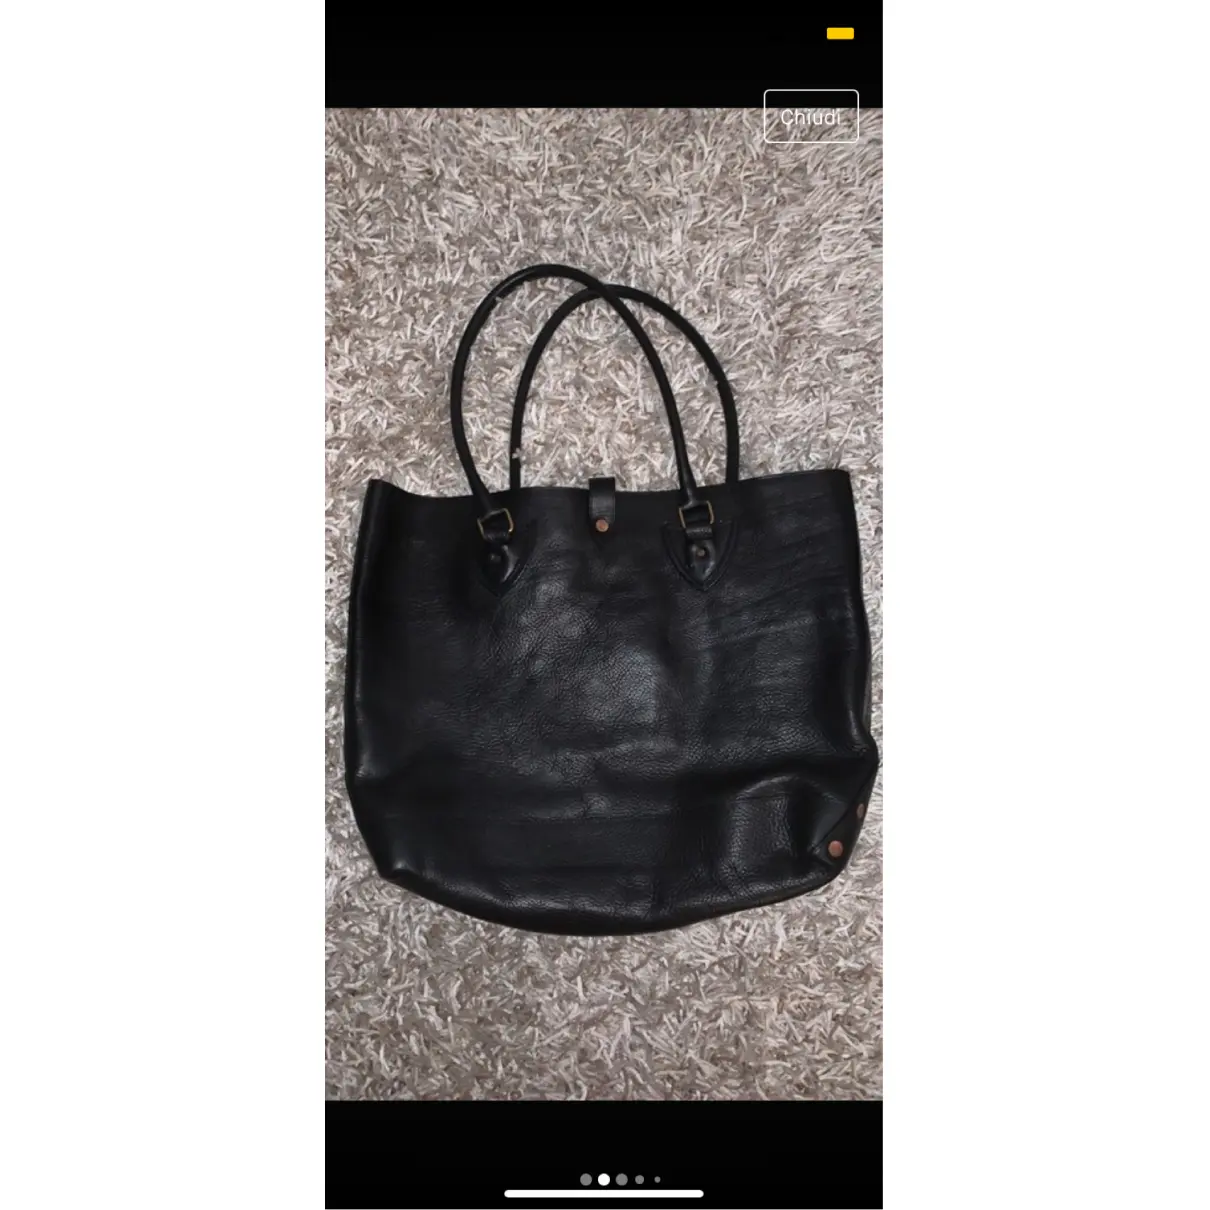 Buy HTC Los Angeles Leather handbag online